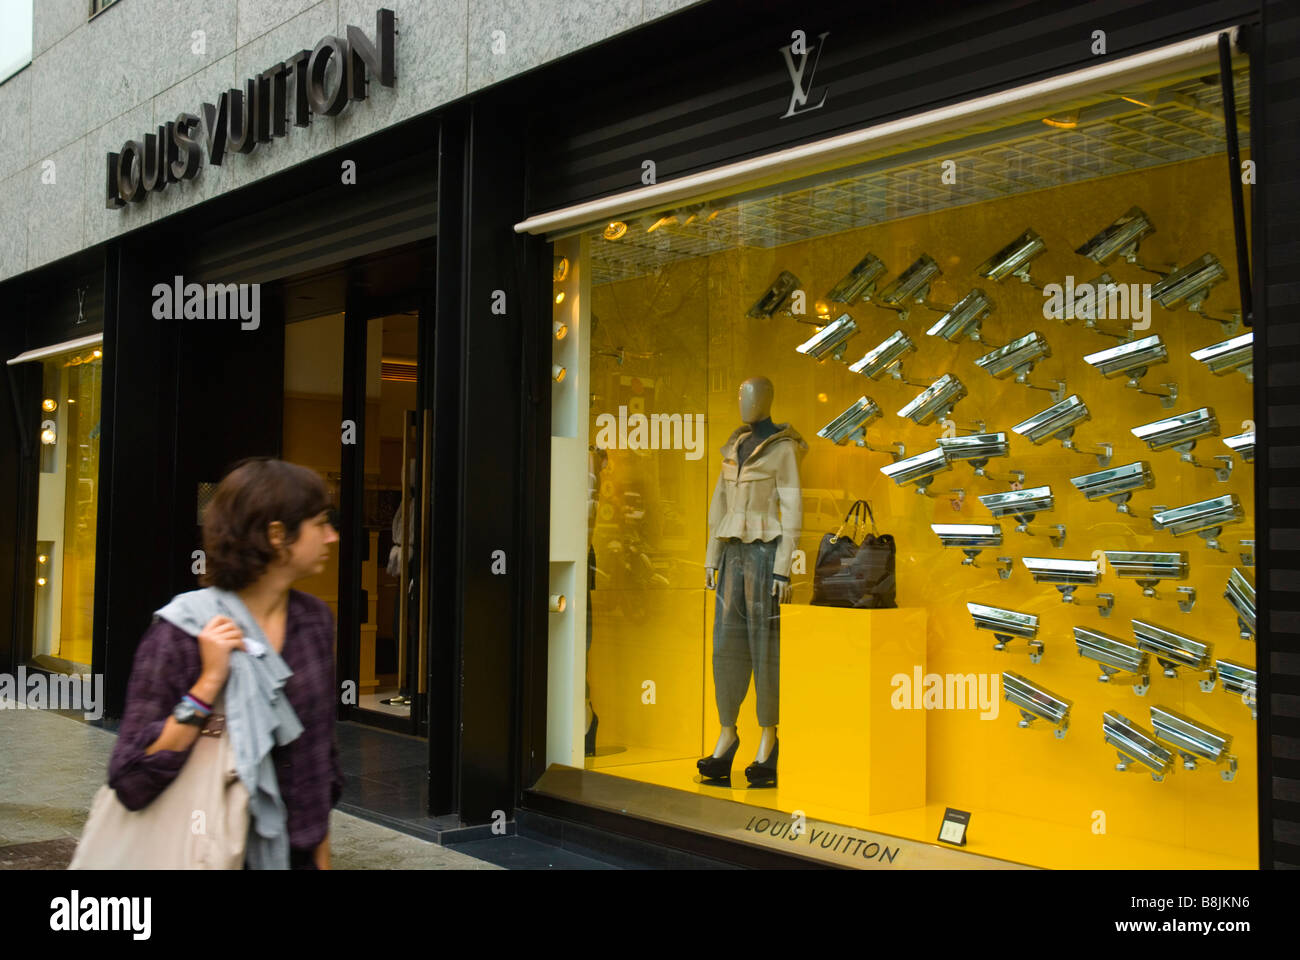 Louis Vuitton Shop Front Stock Photos & Louis Vuitton Shop Front Stock Images - Alamy